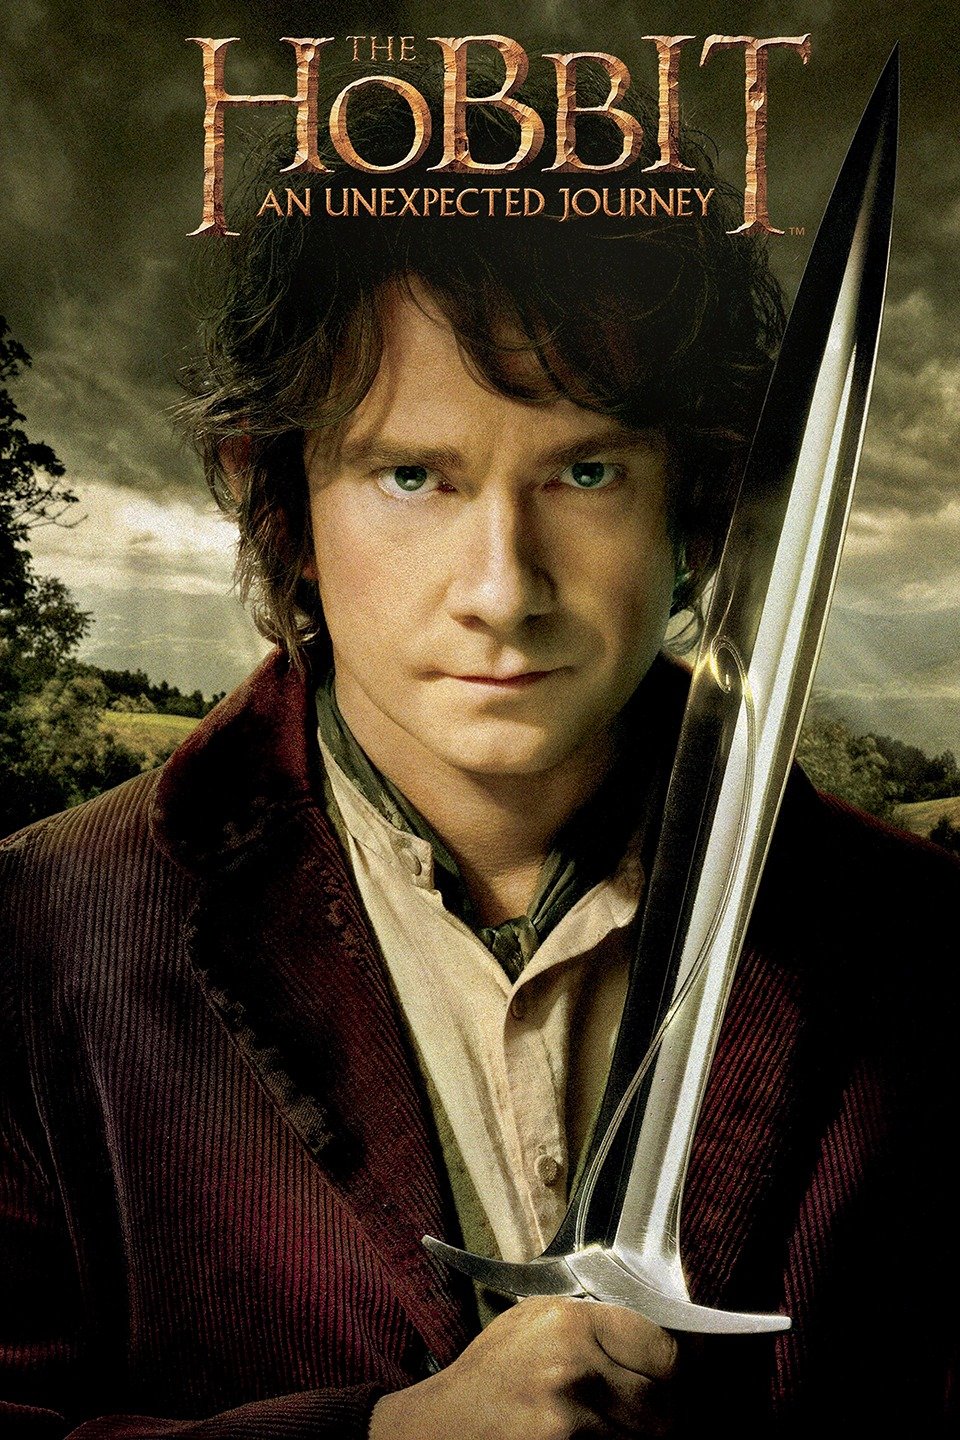 [MINI Super-HQ] The Hobbit: An Unexpected Journey (2012) เดอะ ฮอบบิท: การผจญภัยสุดคาดคิด [Extended Edition] [1080p] [พากย์ไทย 5.1 + อังกฤษ DTS] [บรรยายไทย + อังกฤษ] [ซับไทย + อังกฤษ]